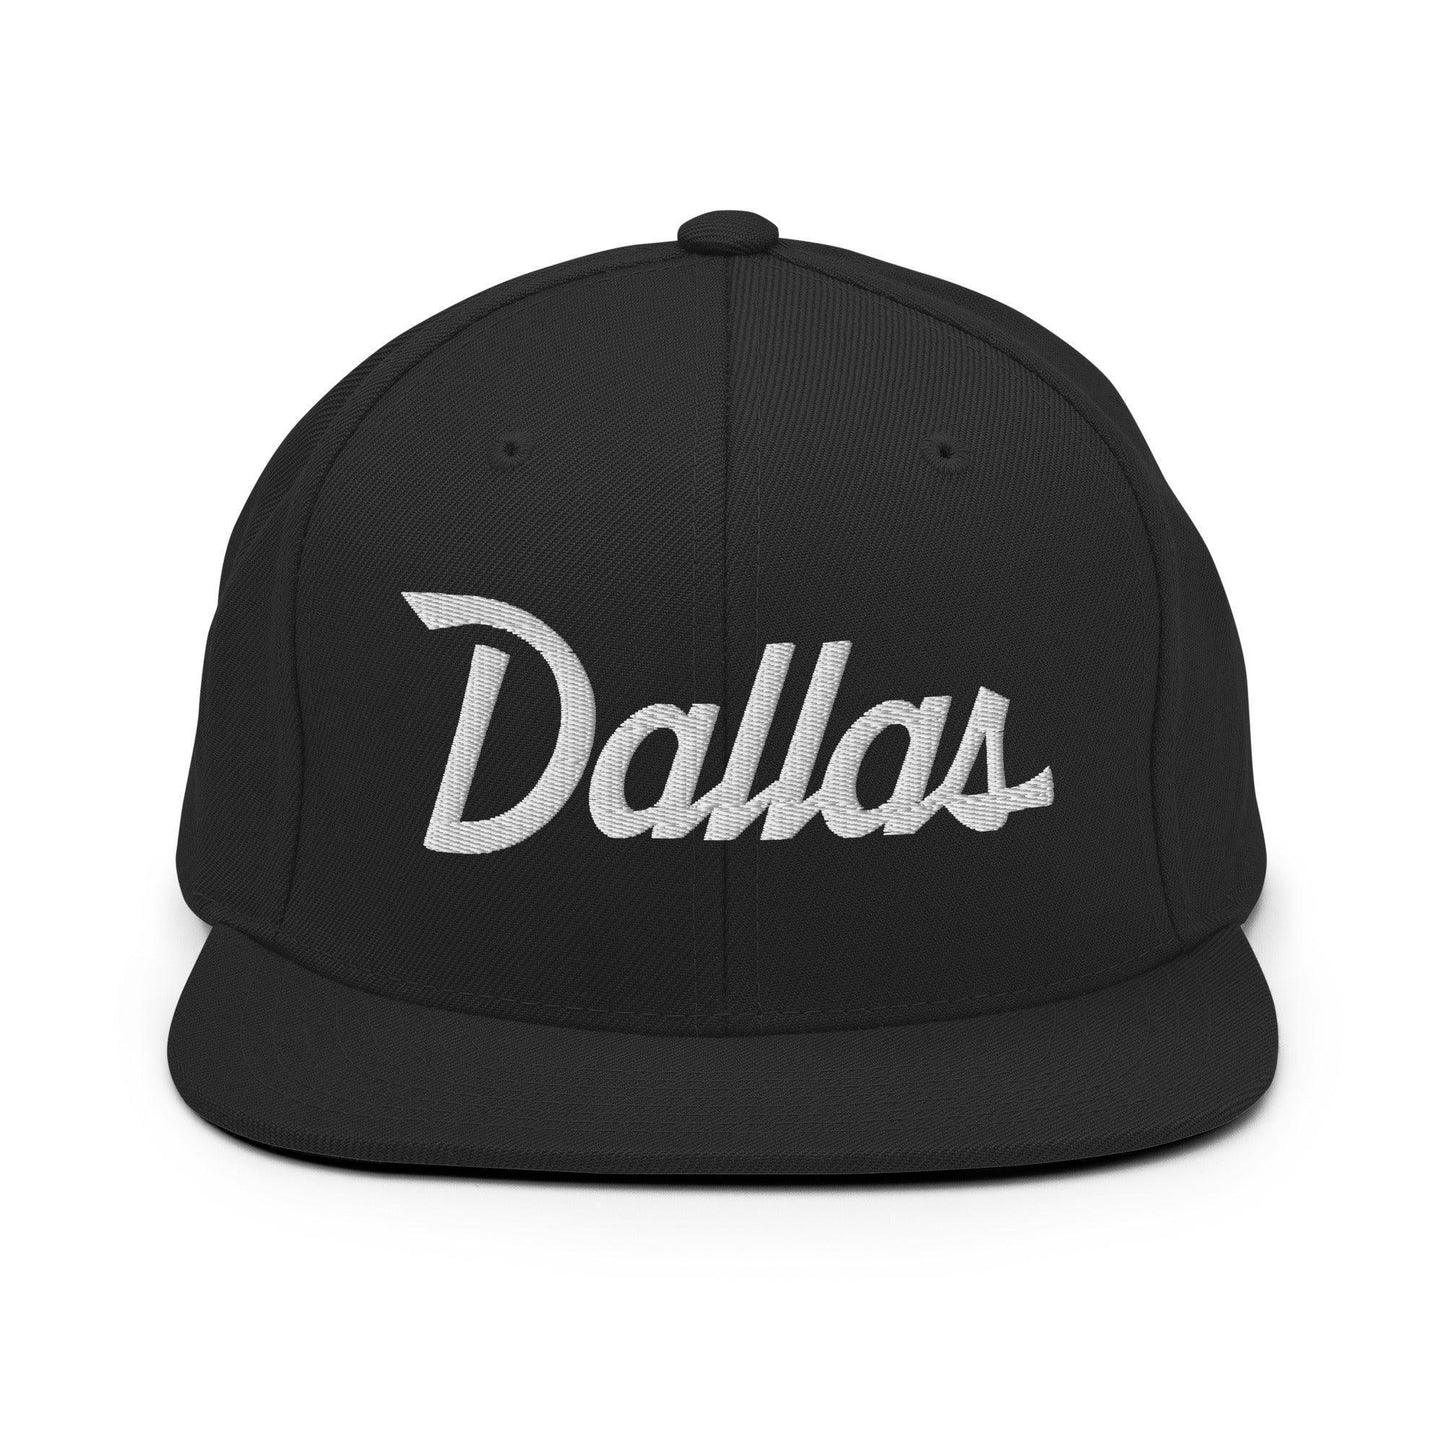 Dallas Script Snapback Hat Black